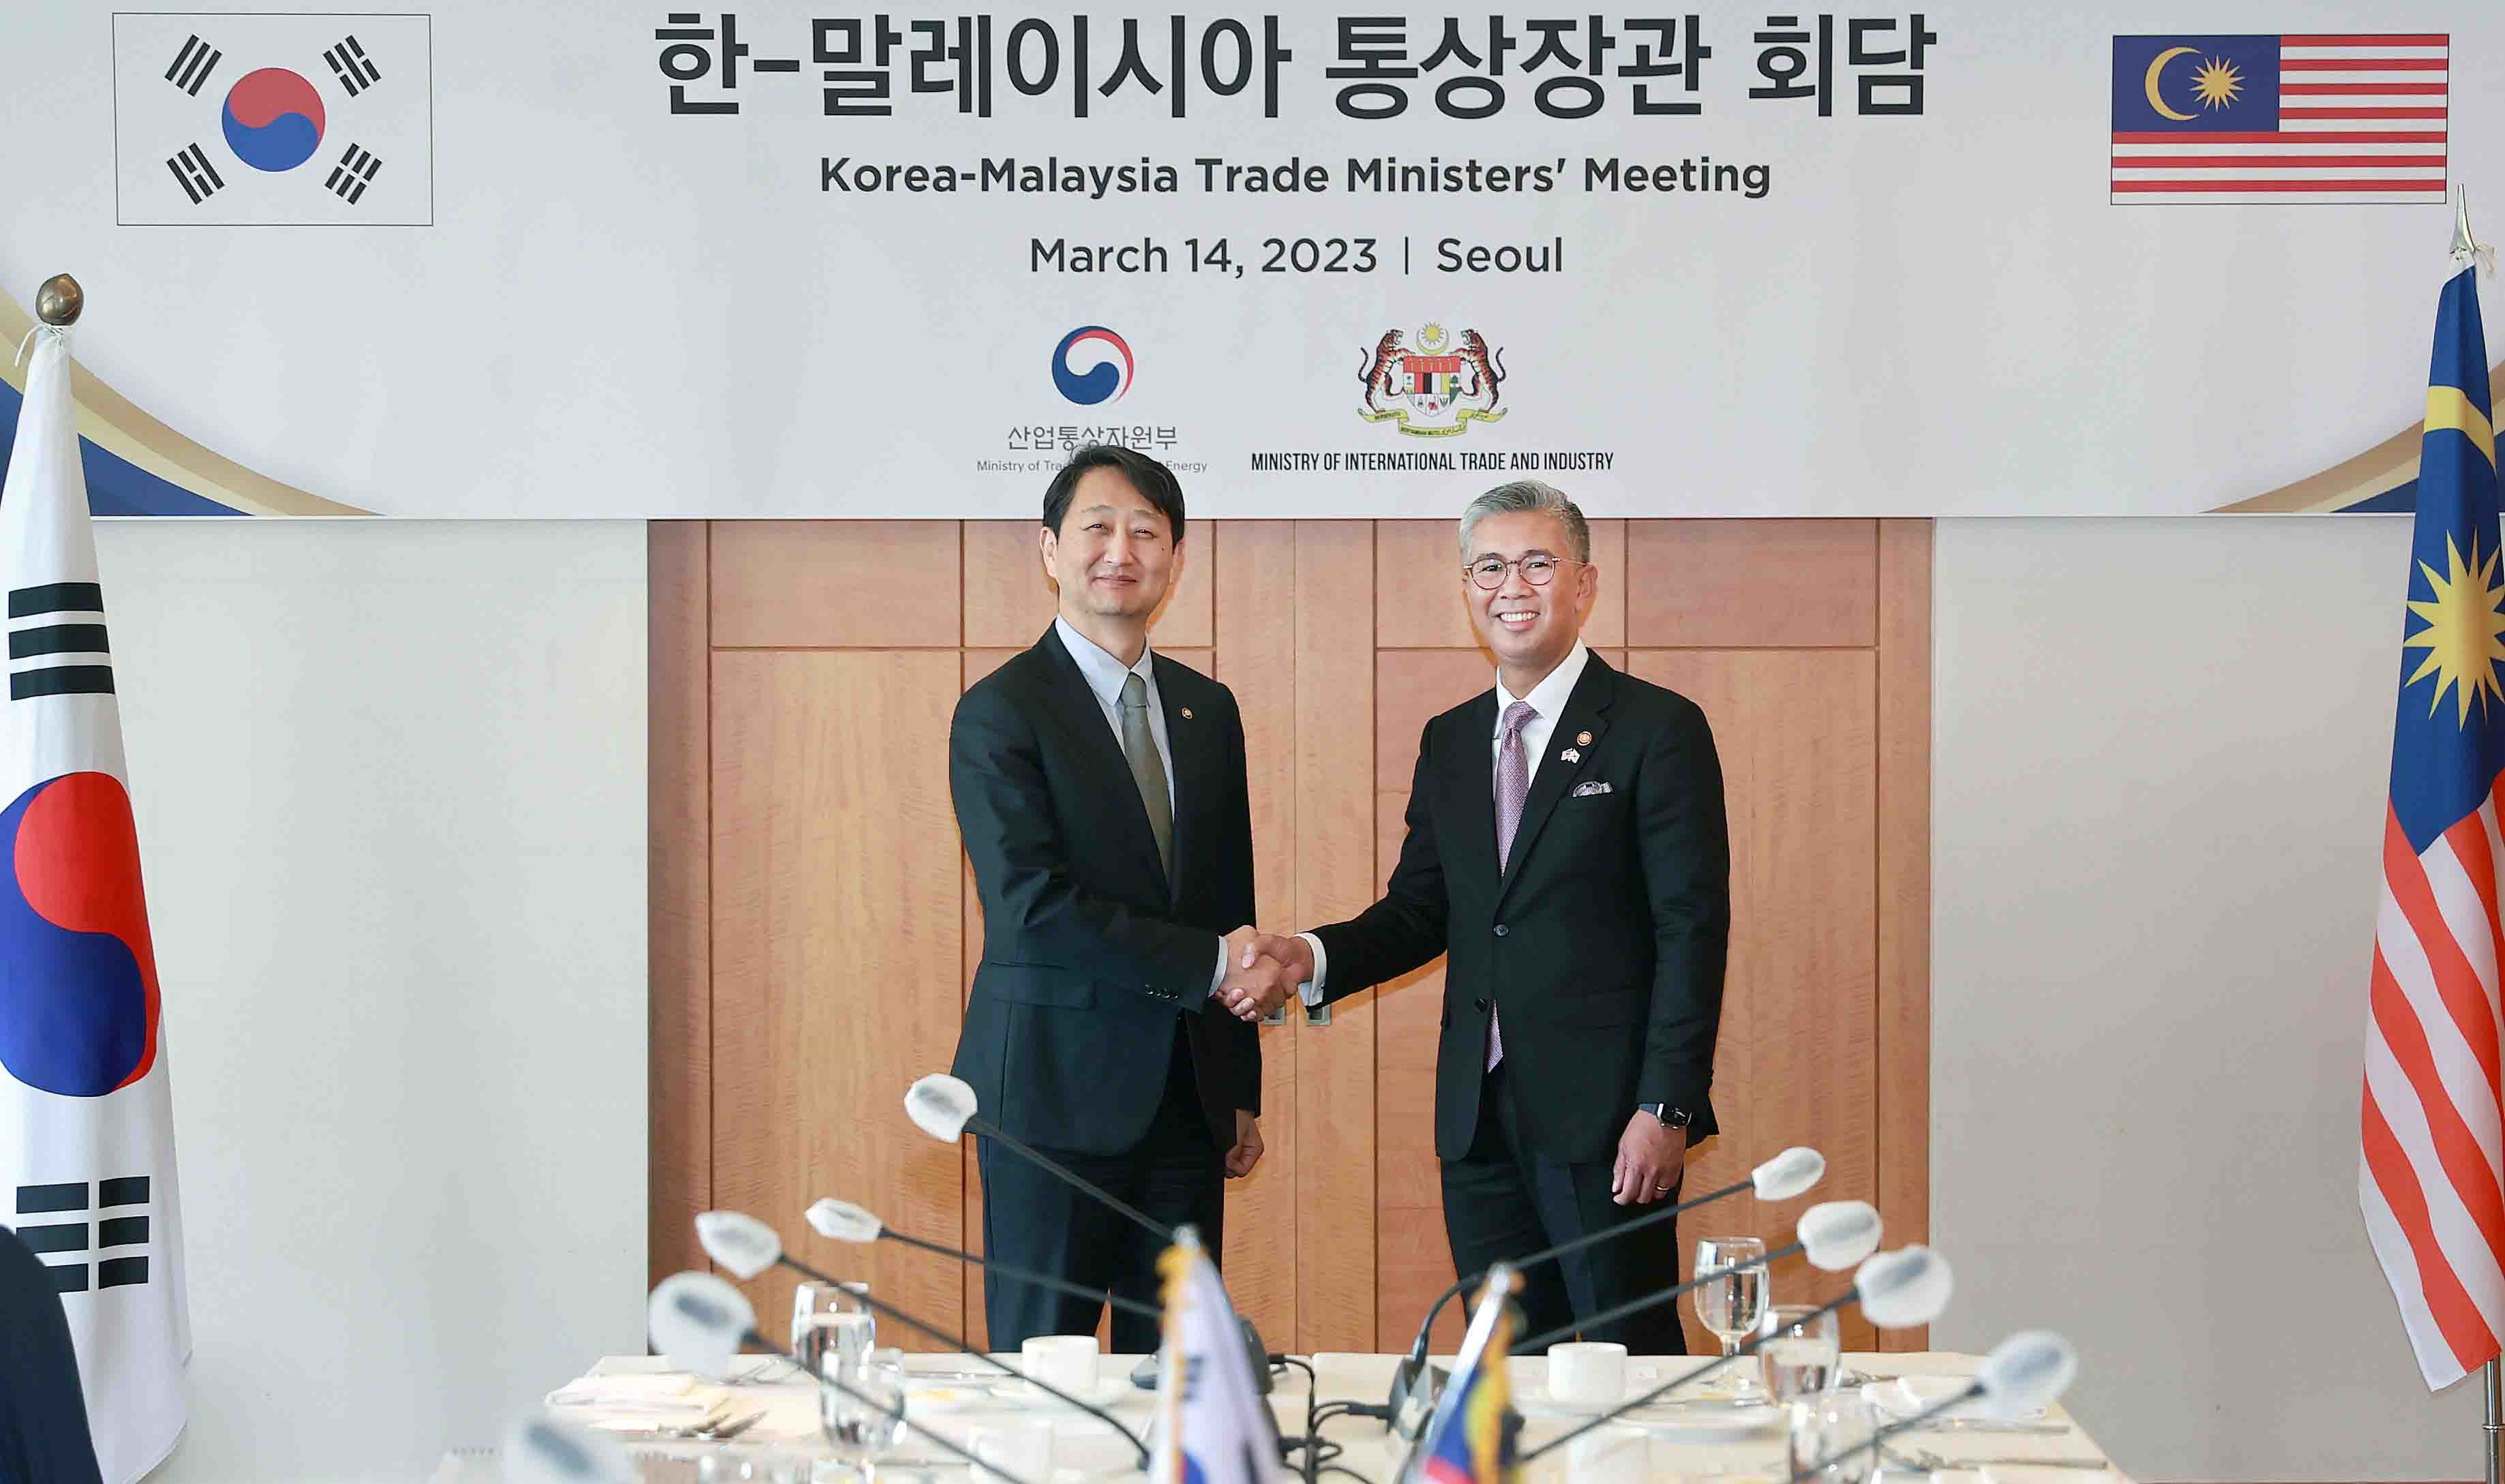 Korea and Malaysia discuss trade and economic cooperation Image 0